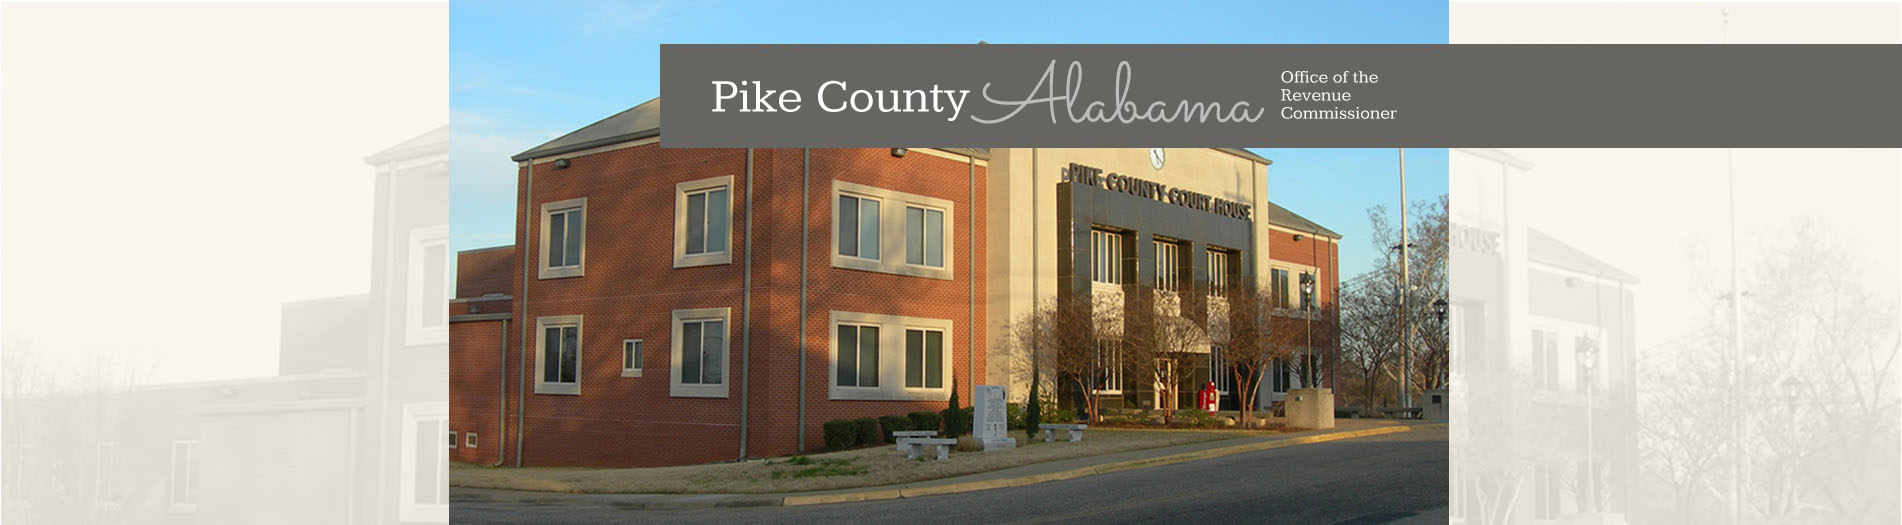 Pike County Revenue